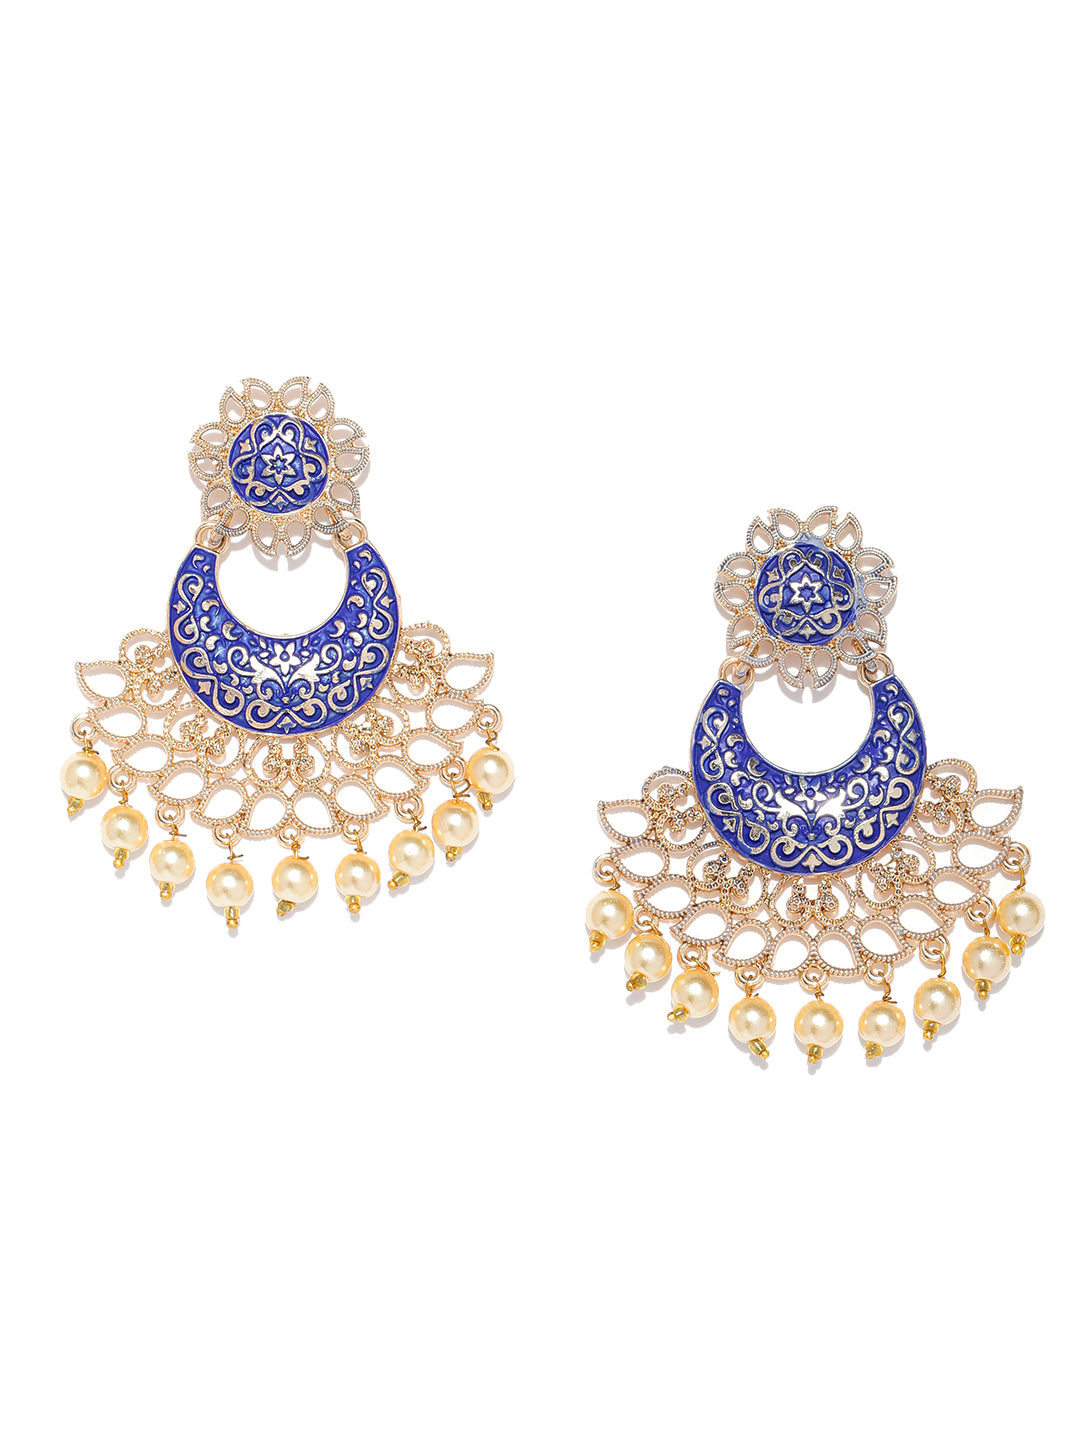 Gold-Plated Meenakari Chandbali Earrings in Navy Blue Color with Pearls Drop